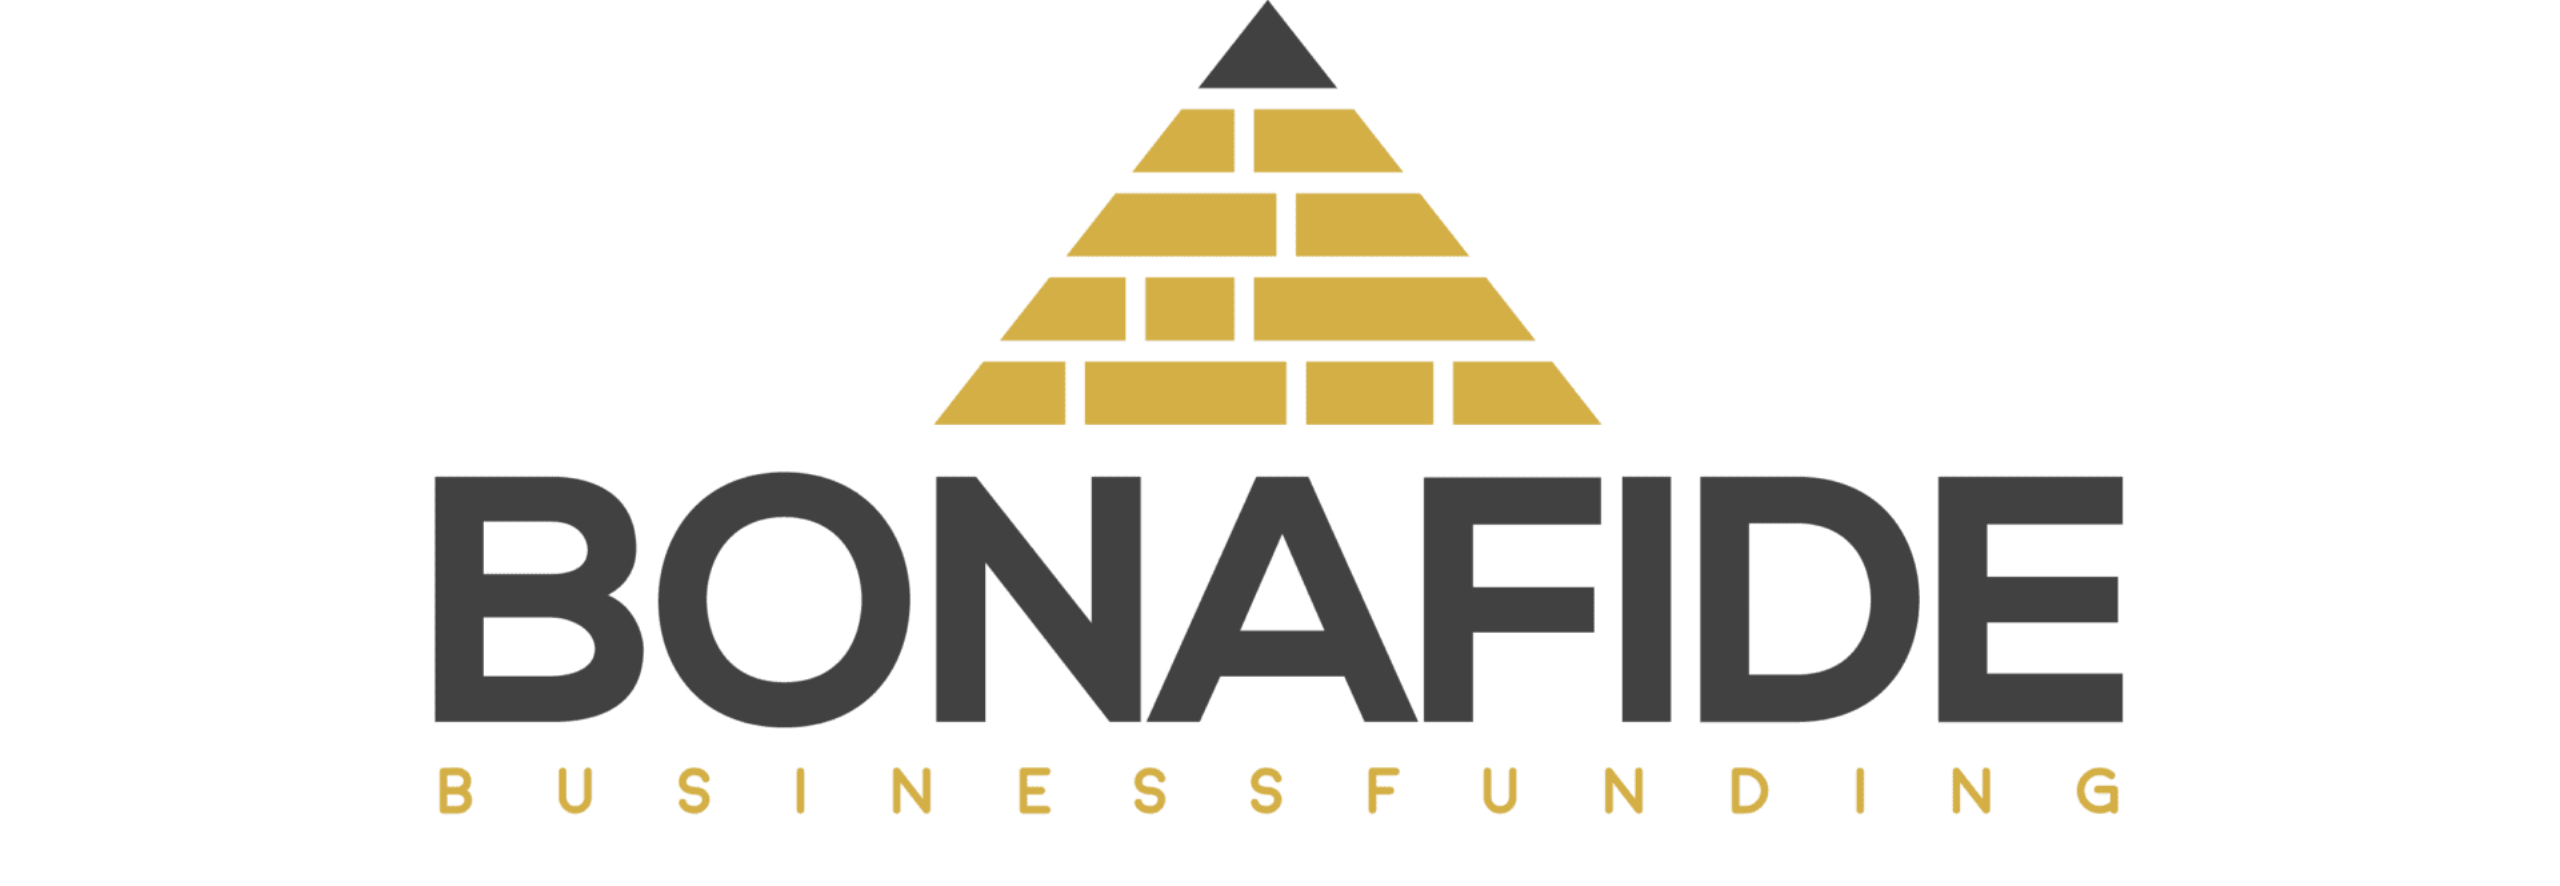 Bonafide Business Funding Logo